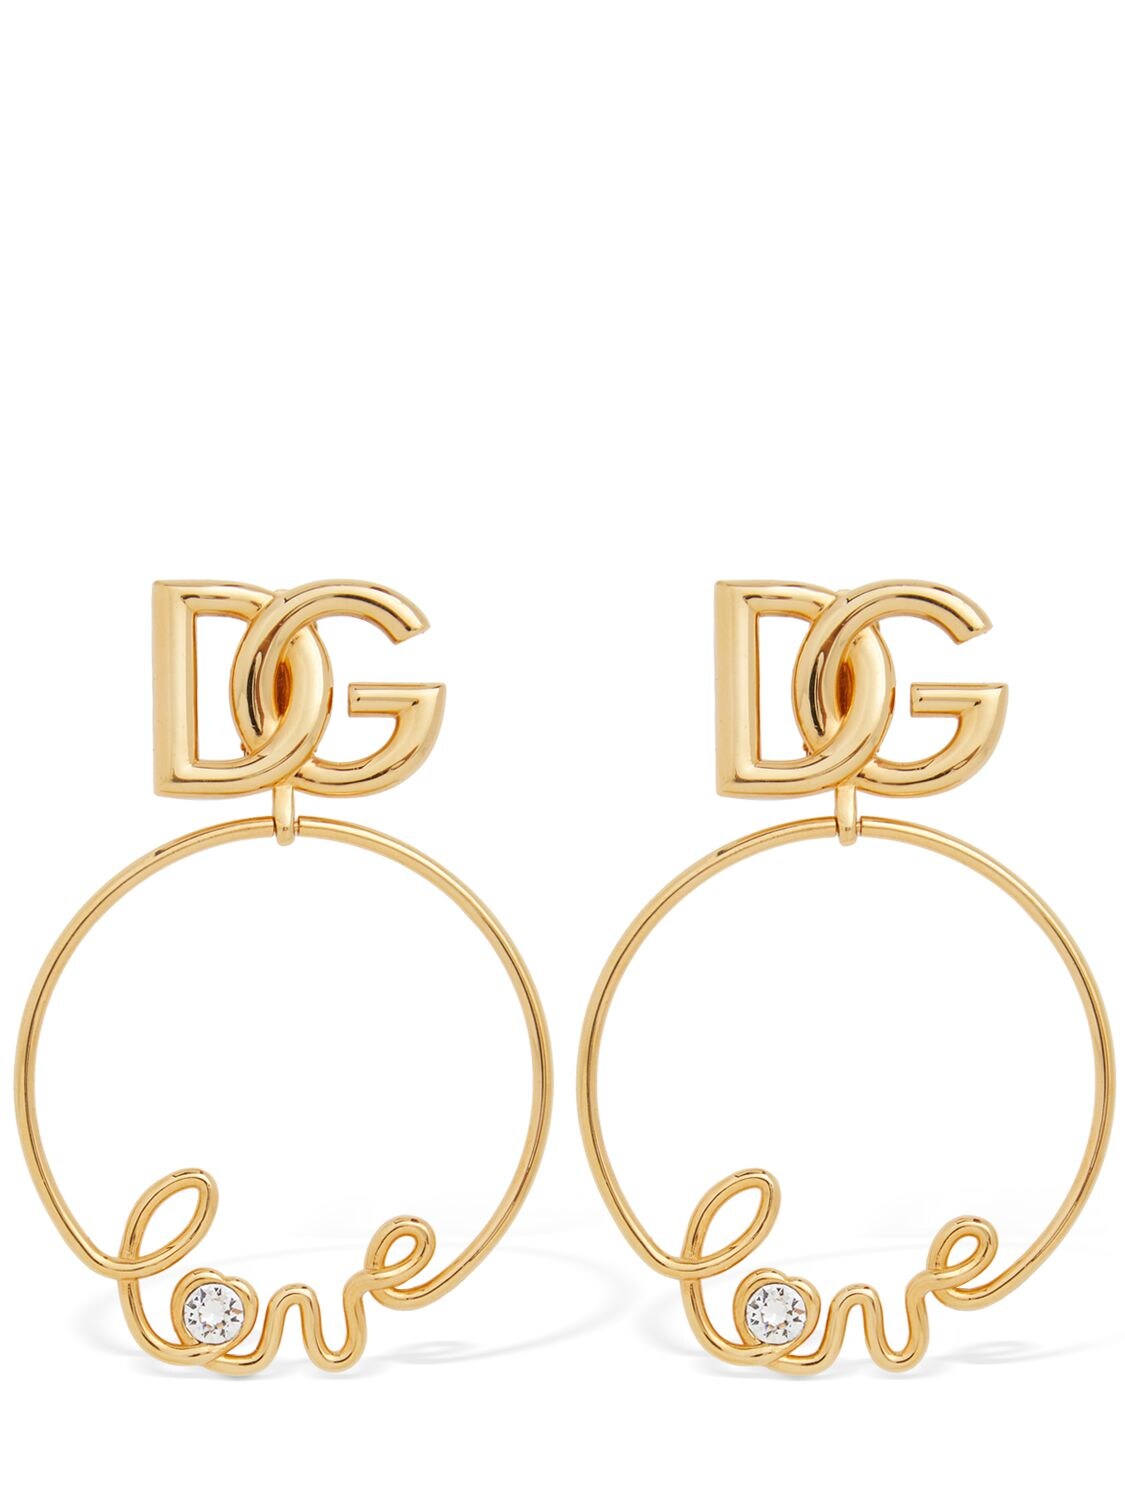 Love Dg Clip-on Earrings